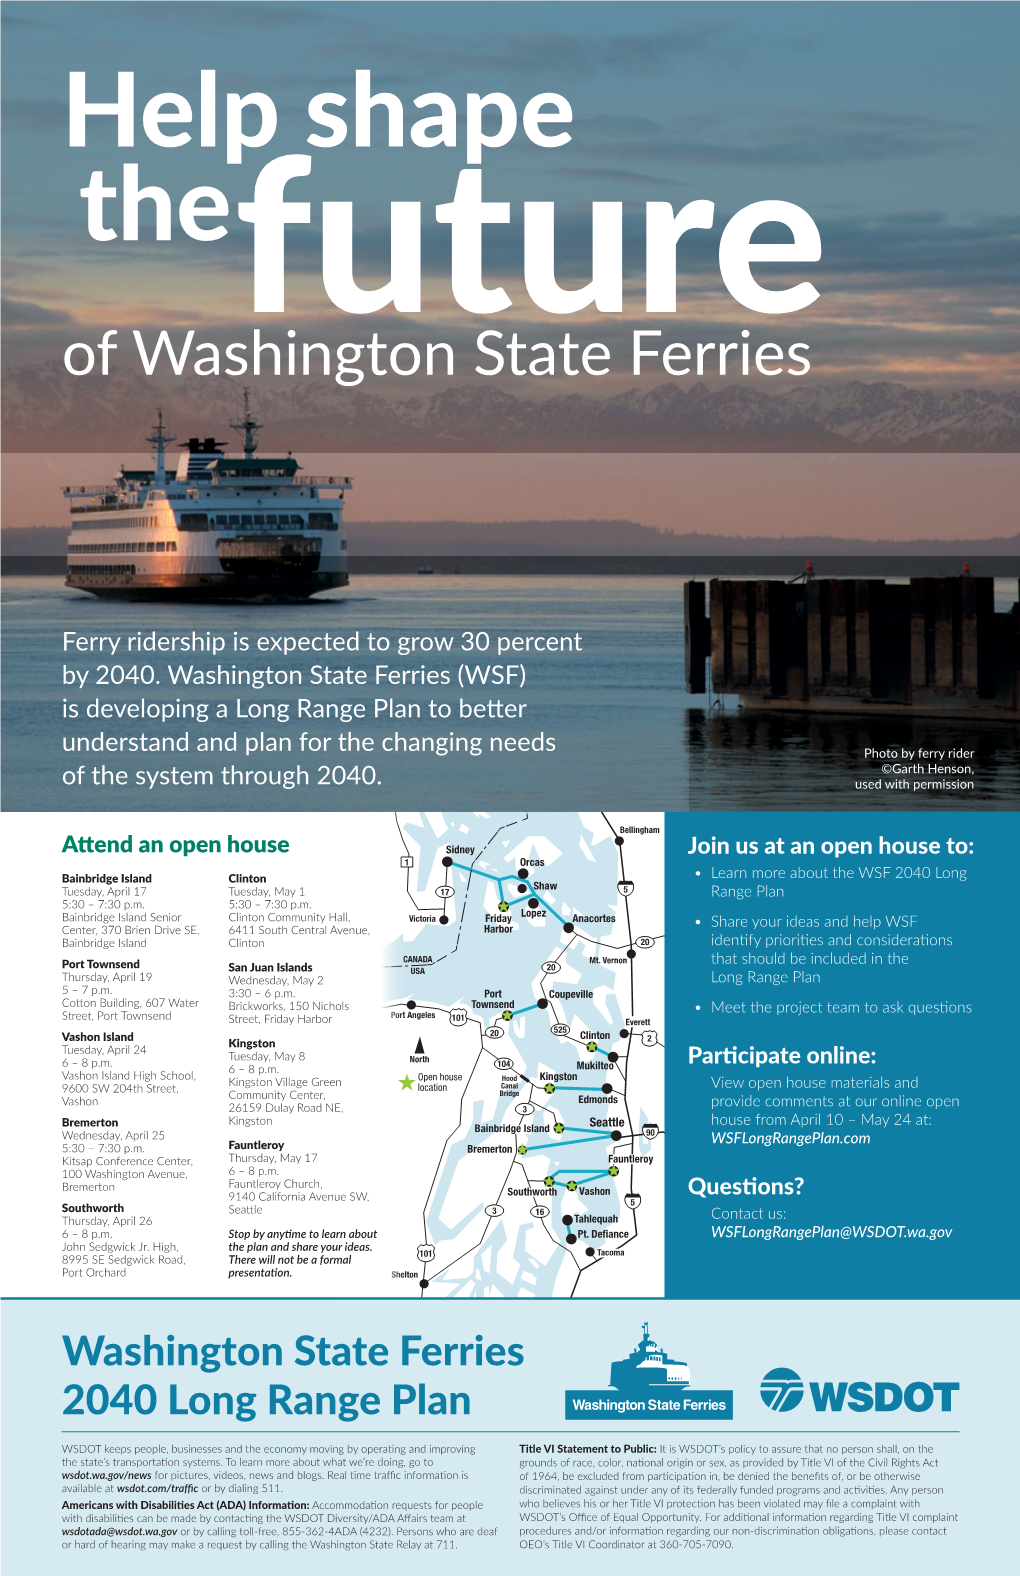 Of Washington State Ferries